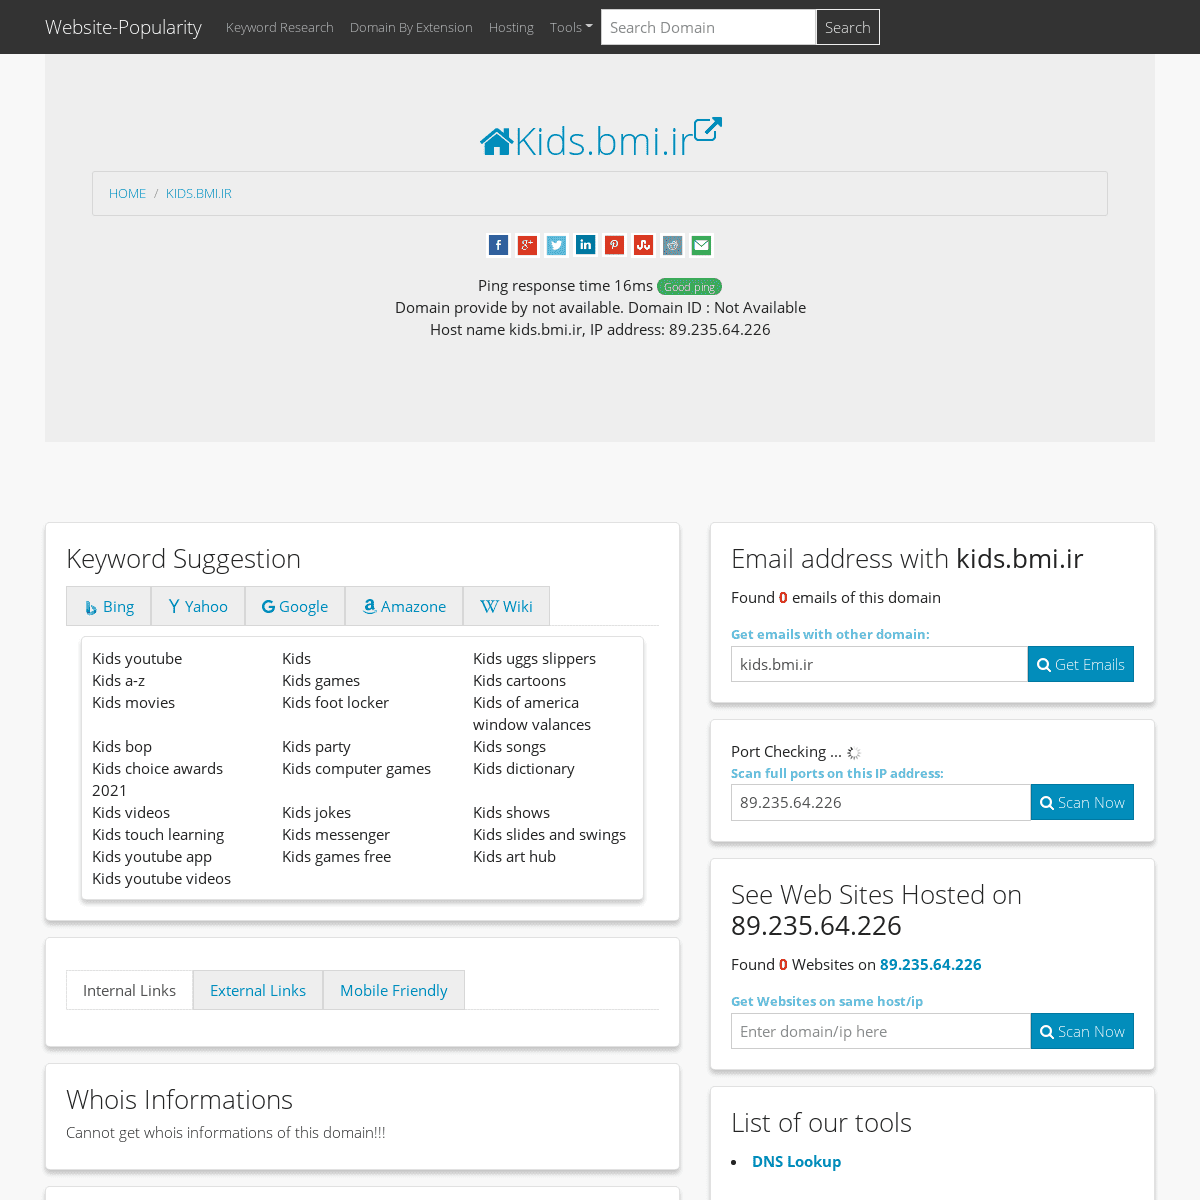 A complete backup of https://www.website-popularity.info/kids.bmi.ir/